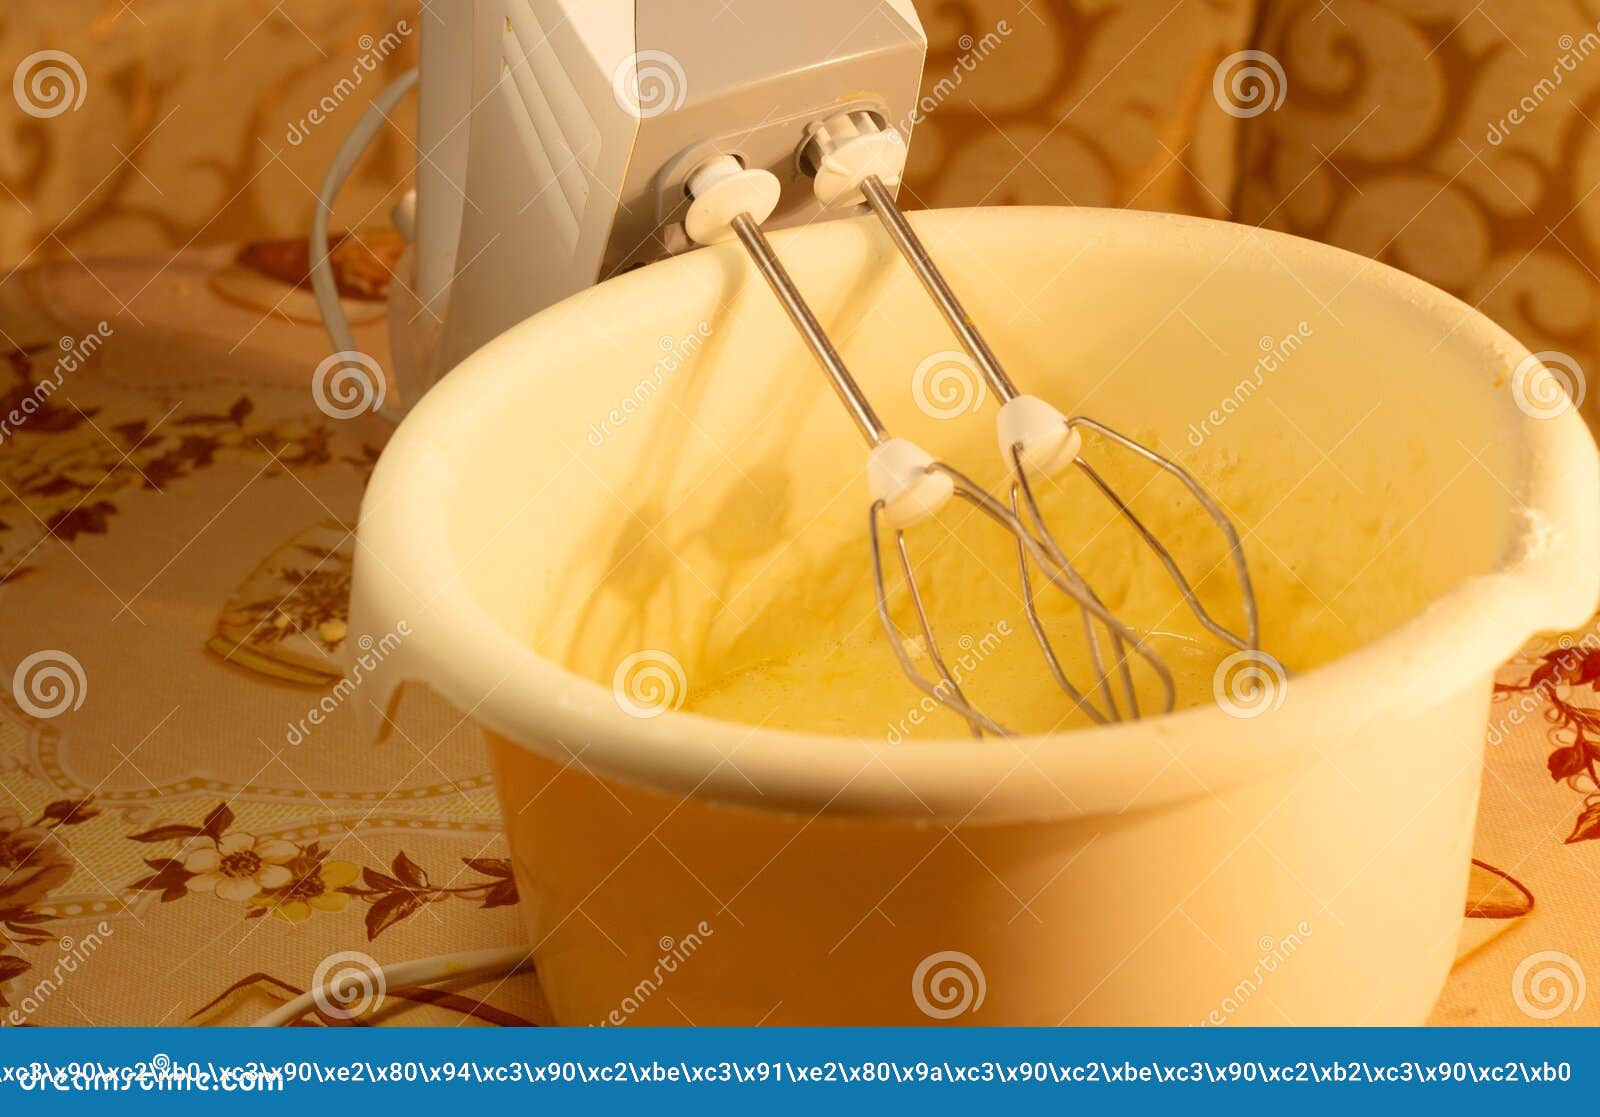 Mixing the Pancake Batter with a Mixer Stock Image - Image of processor,  mixer: 201693739